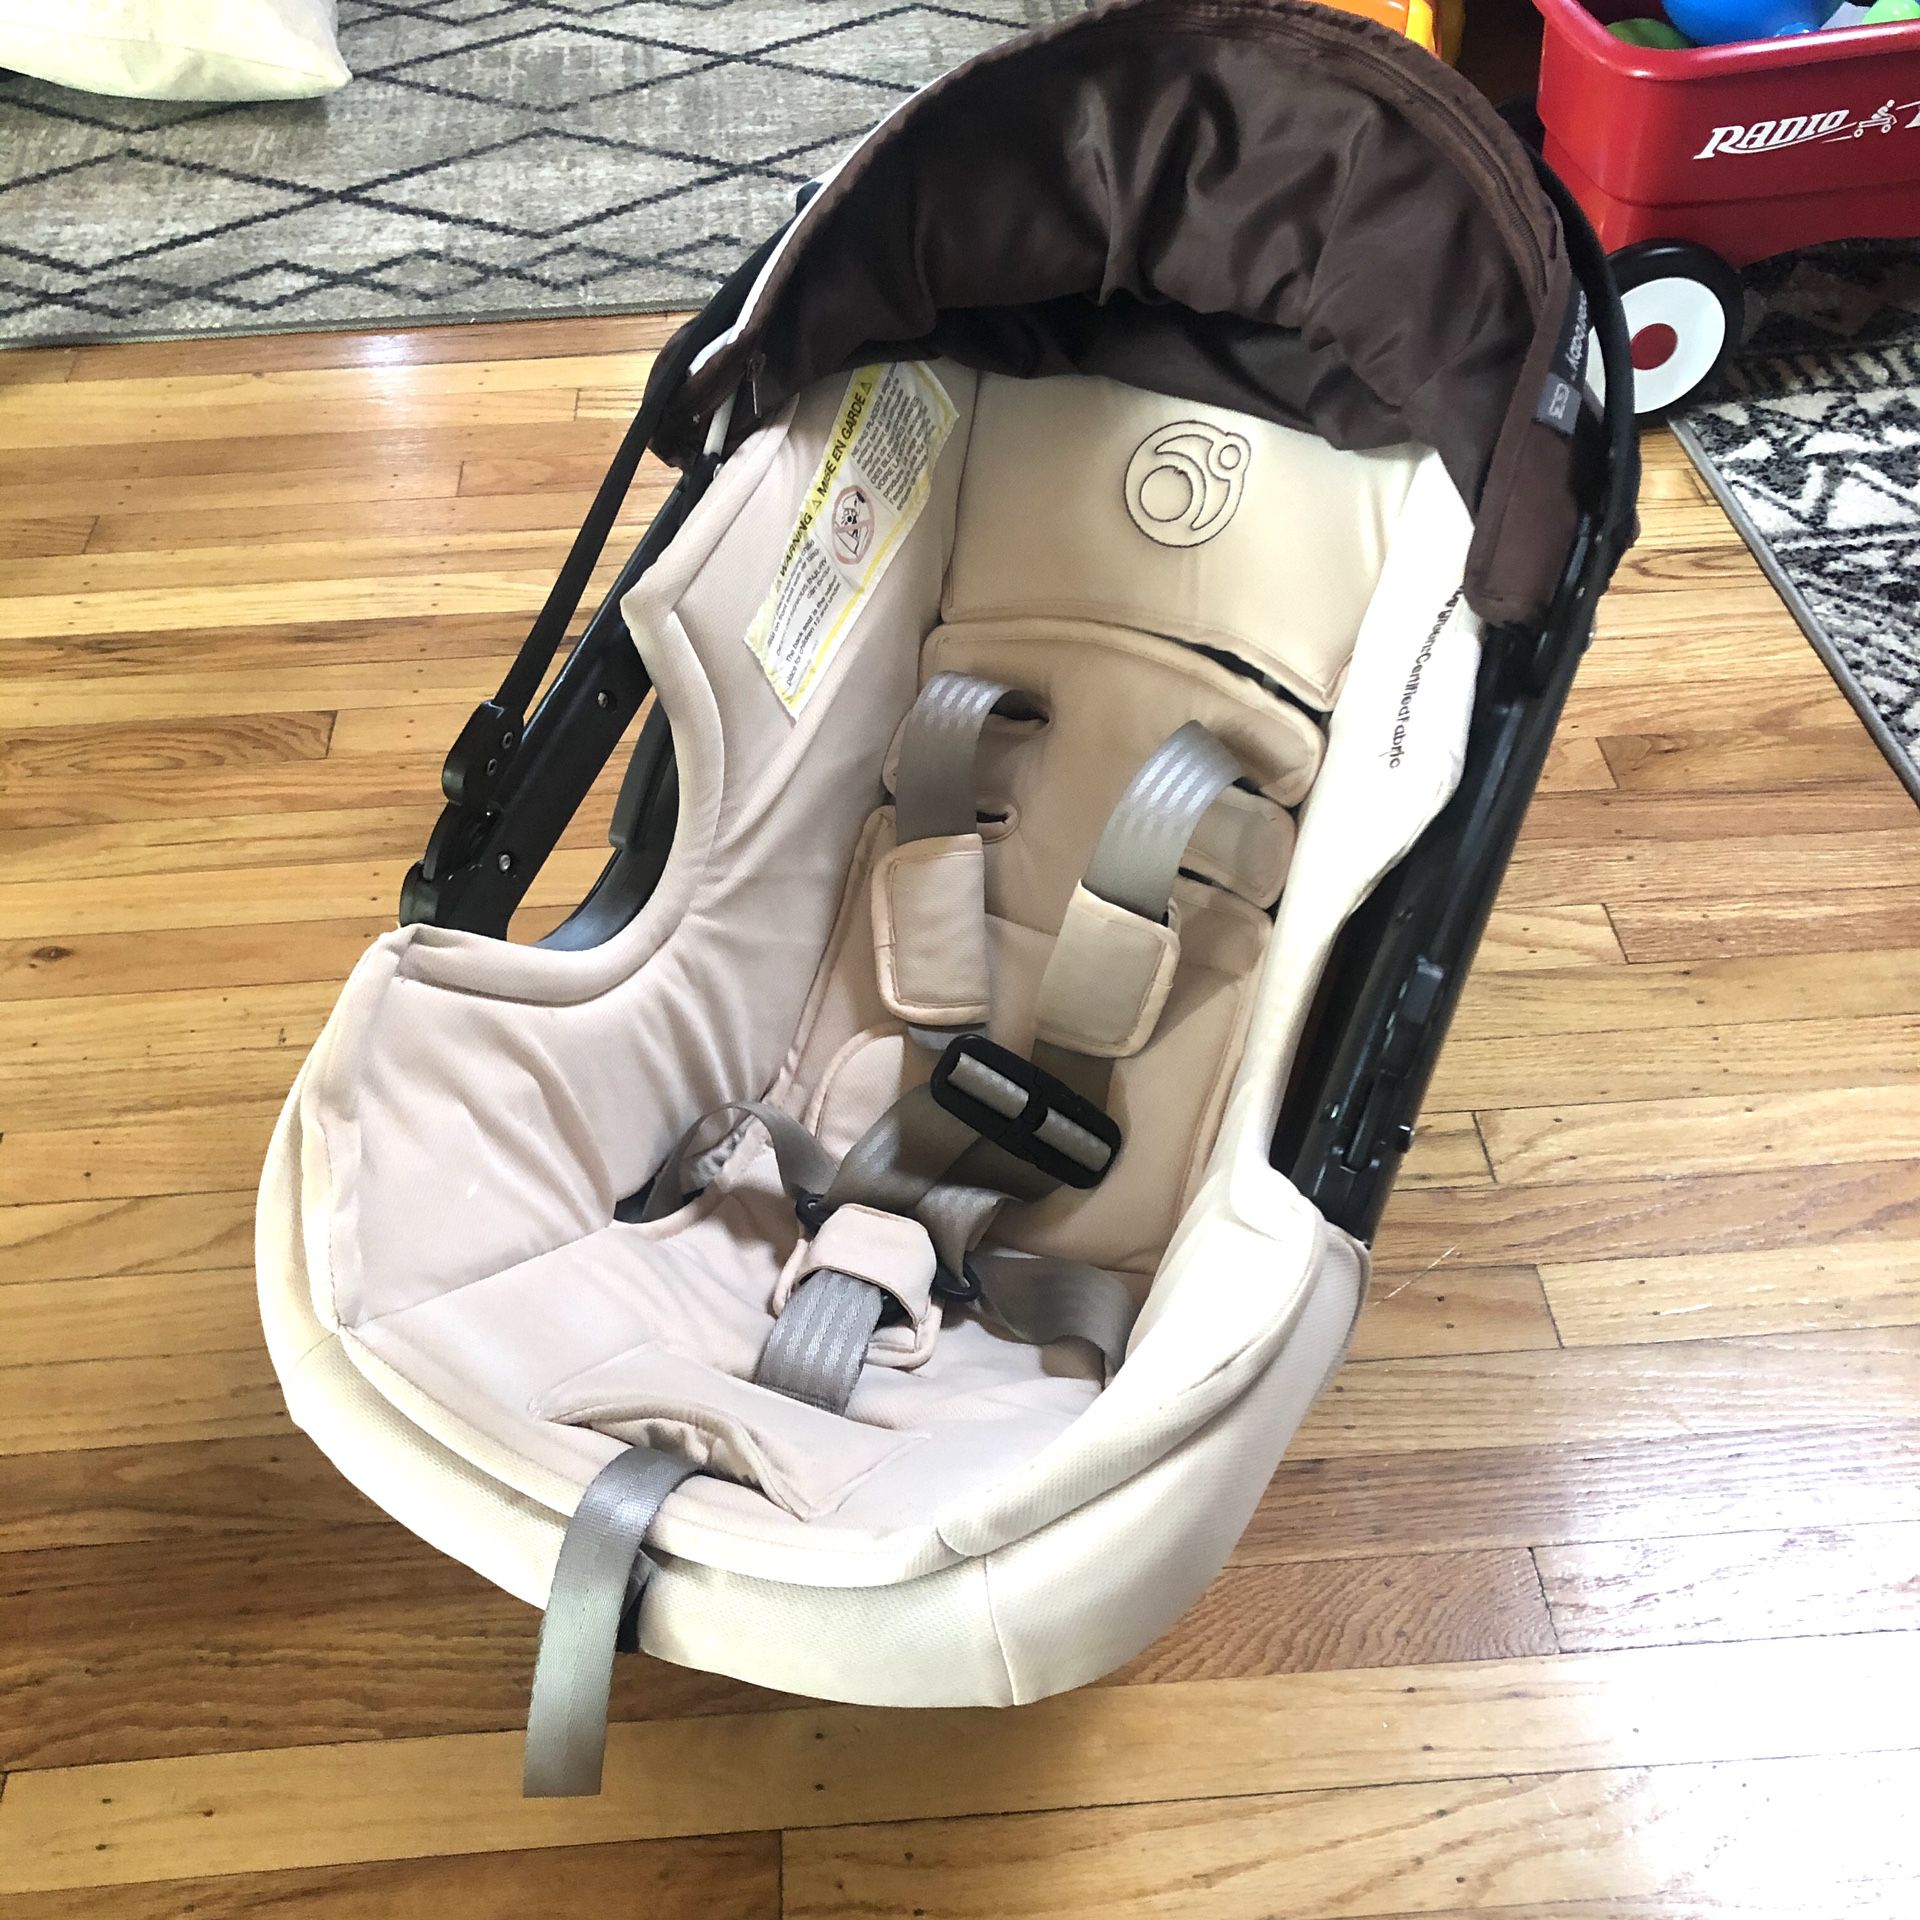 Orbit Baby G3 Infant Car Seat - Brown